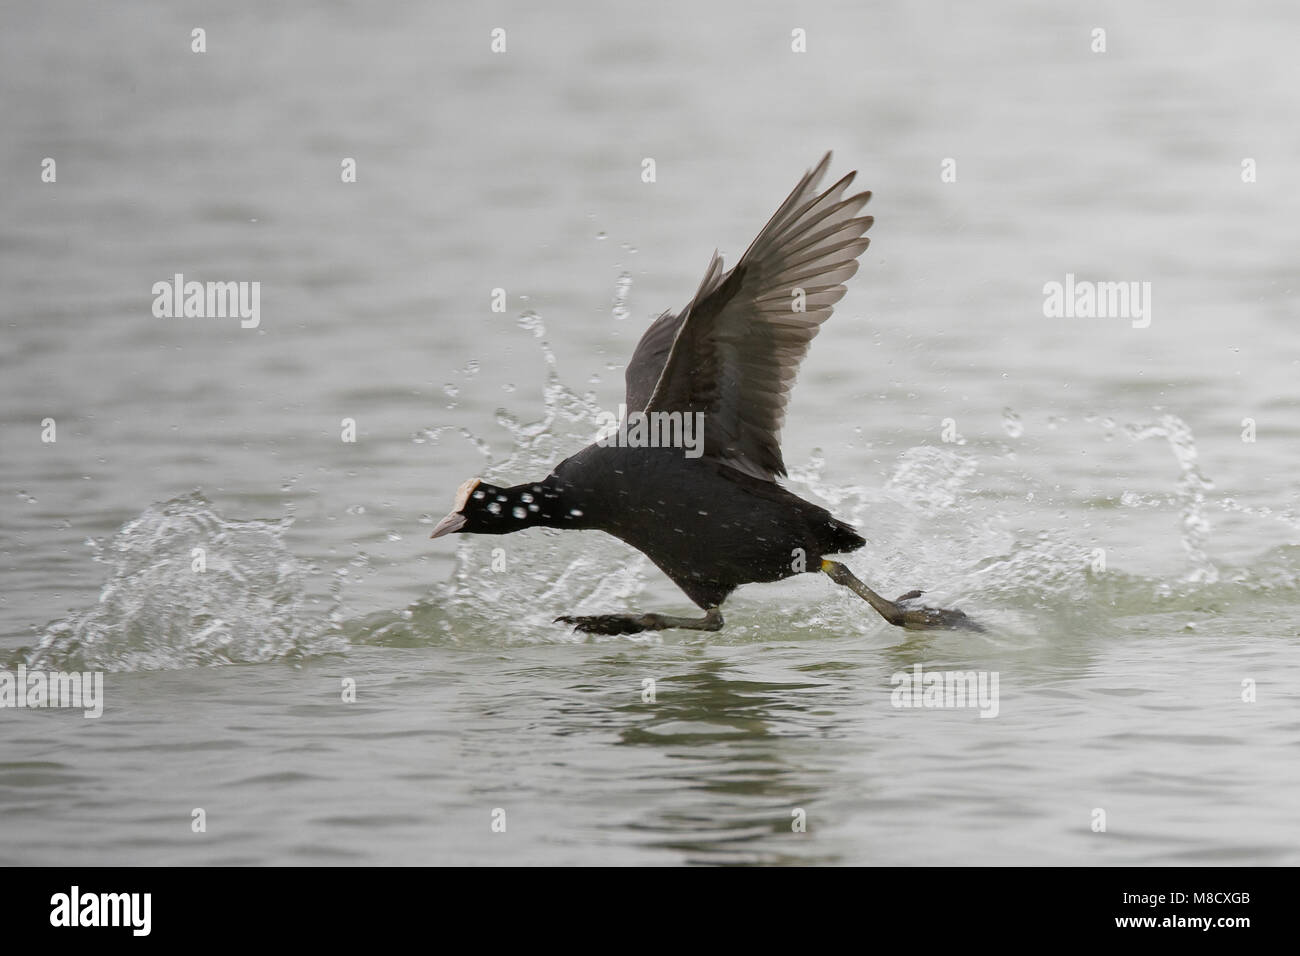 Meerkoet lopend over water; Eurasian Coot running on water Stock Photo